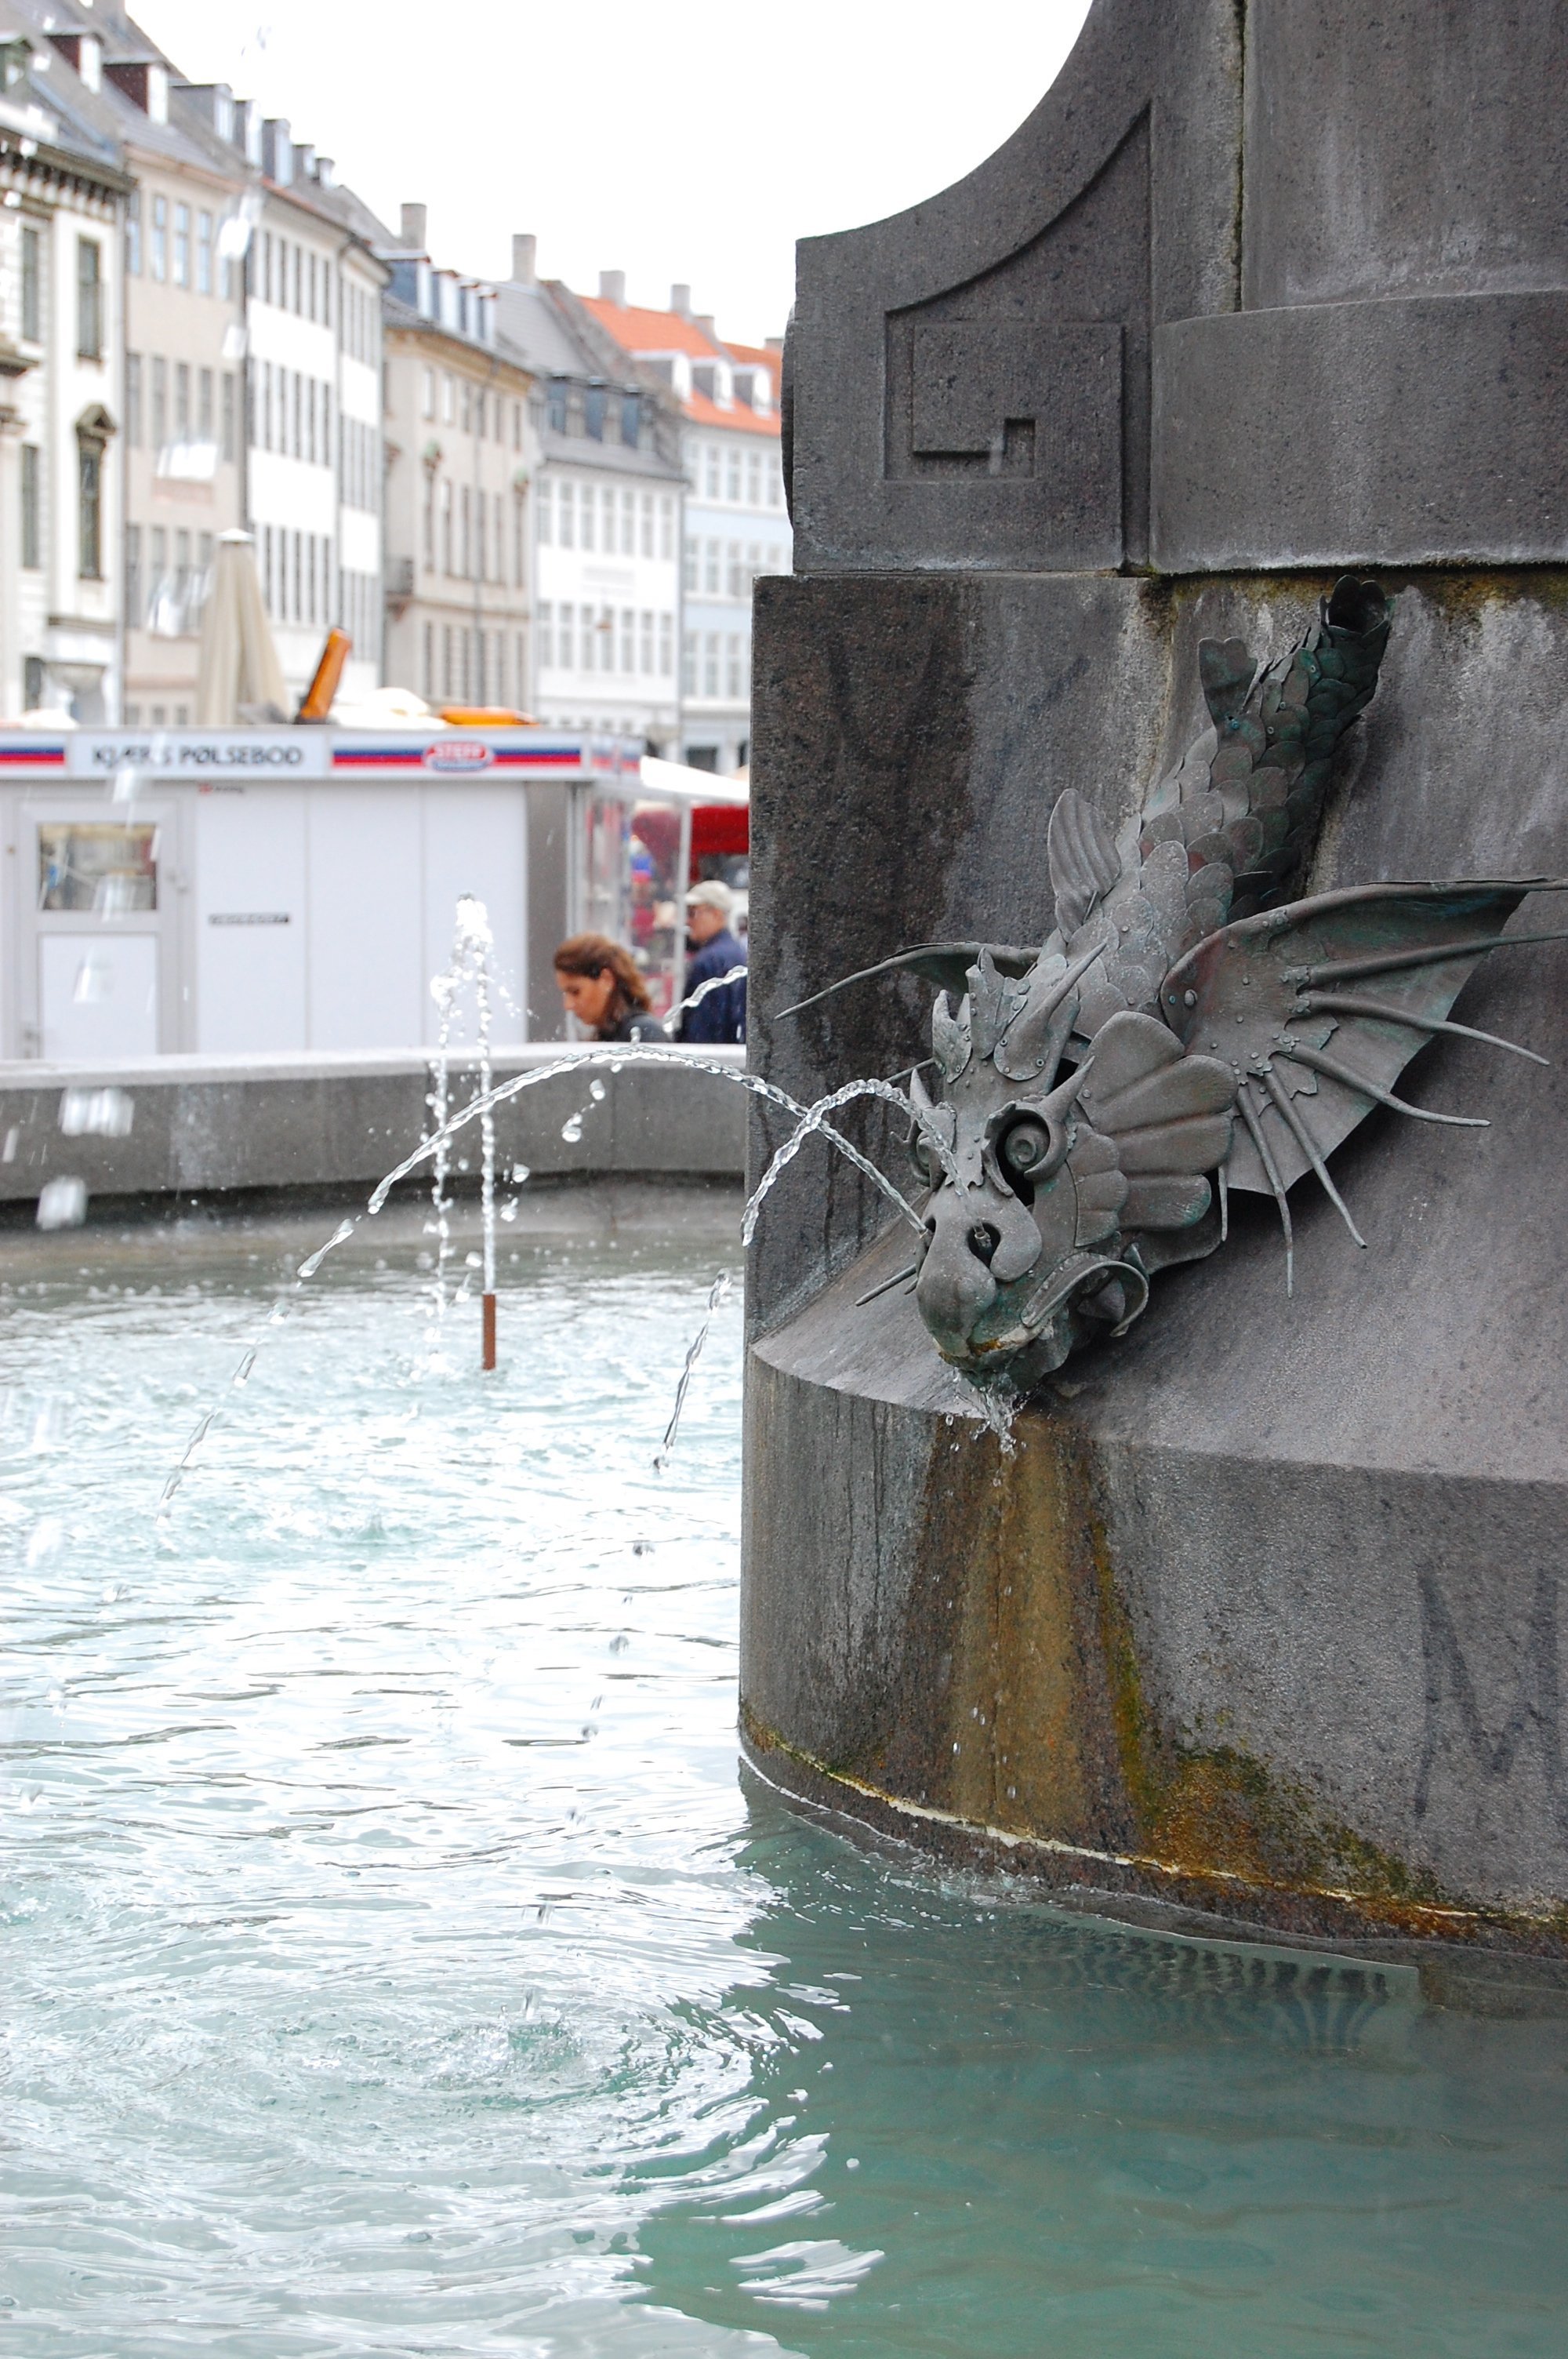 fish fountain